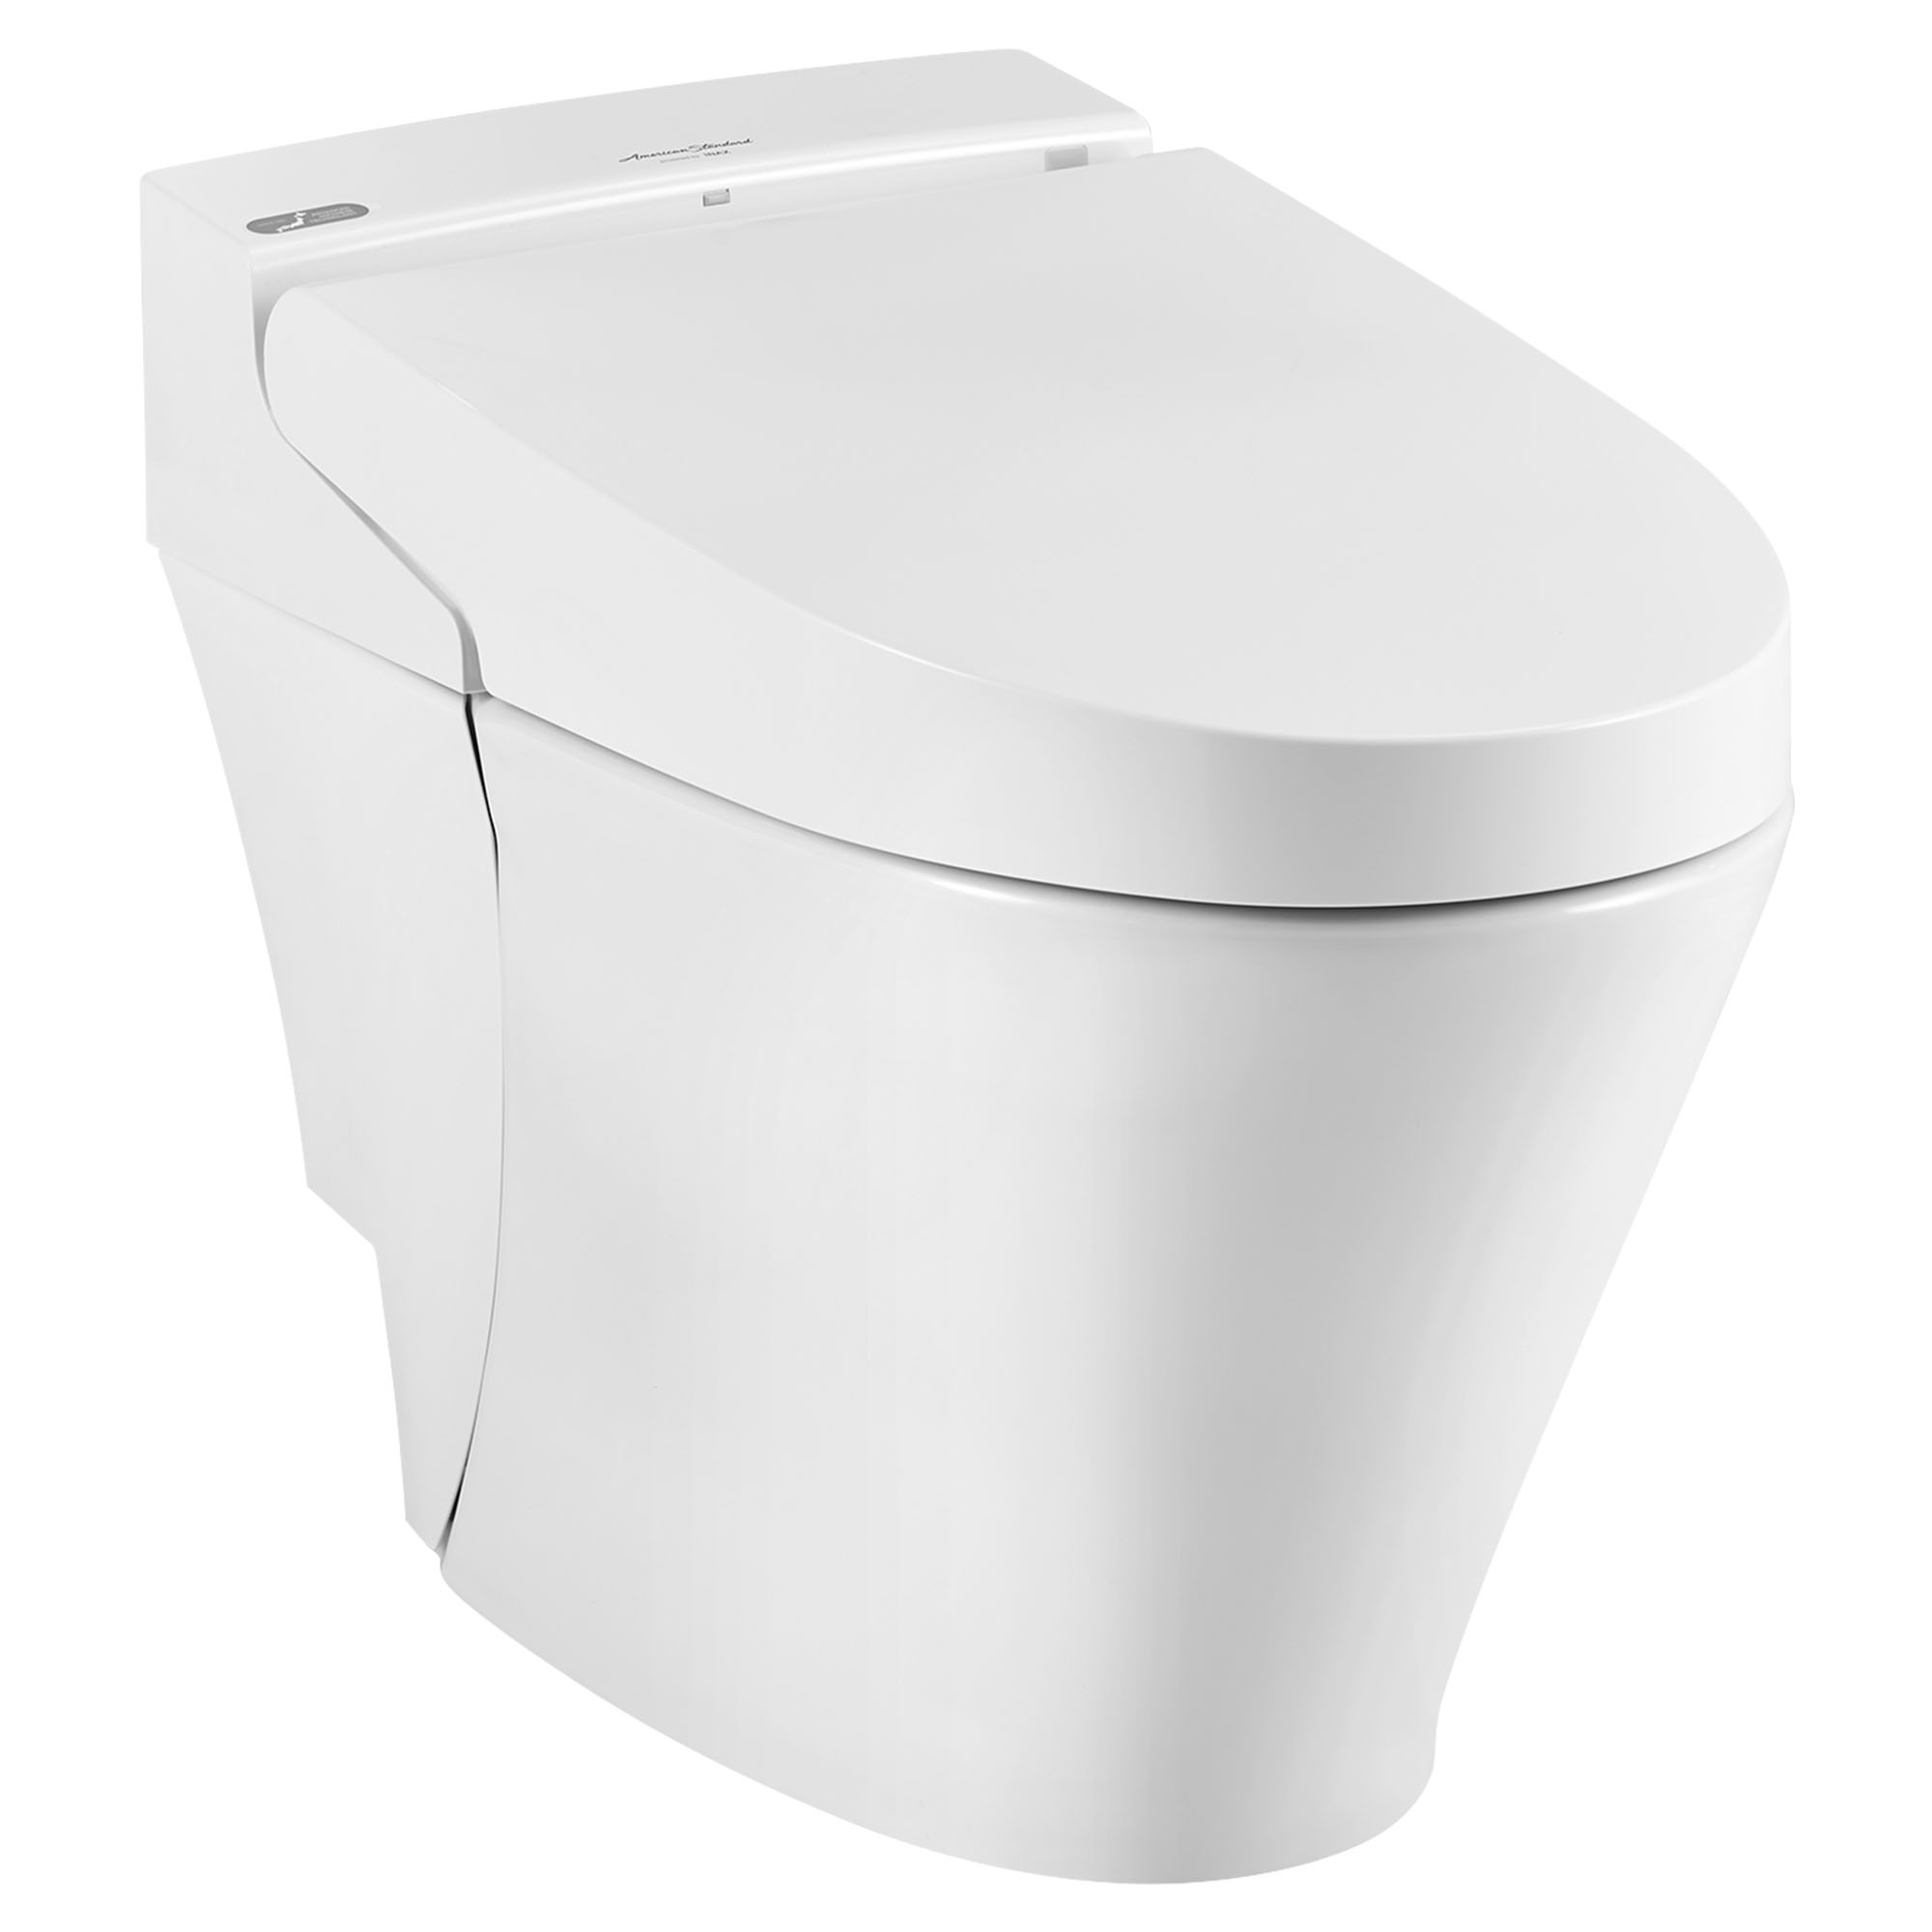 Toilette SpaLet Advanced Clean 100 Chasse double WaterSense MC 1,32 – 0,92 gpc /4,9 – 3,4 lpc